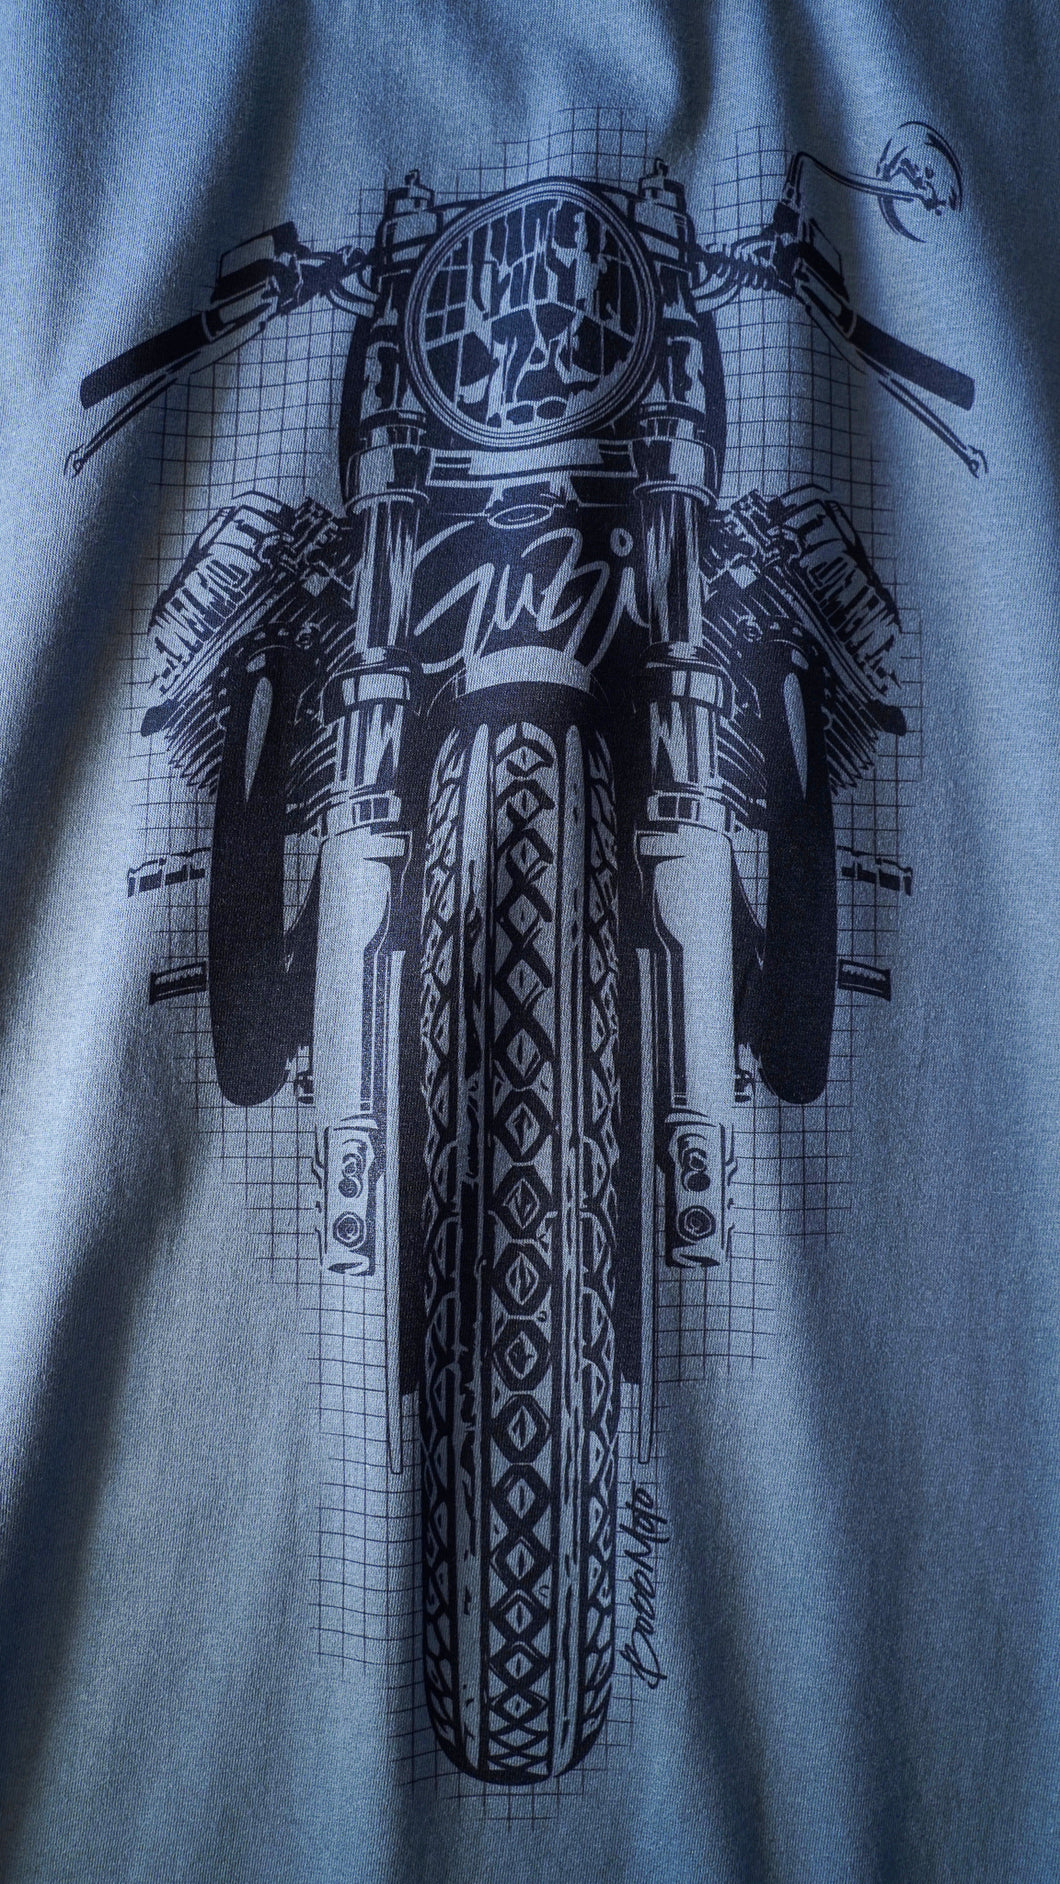 Moto Guzzi Black Motorcycle Tee Shirt – BOSS MOTO CLOTHING LLC